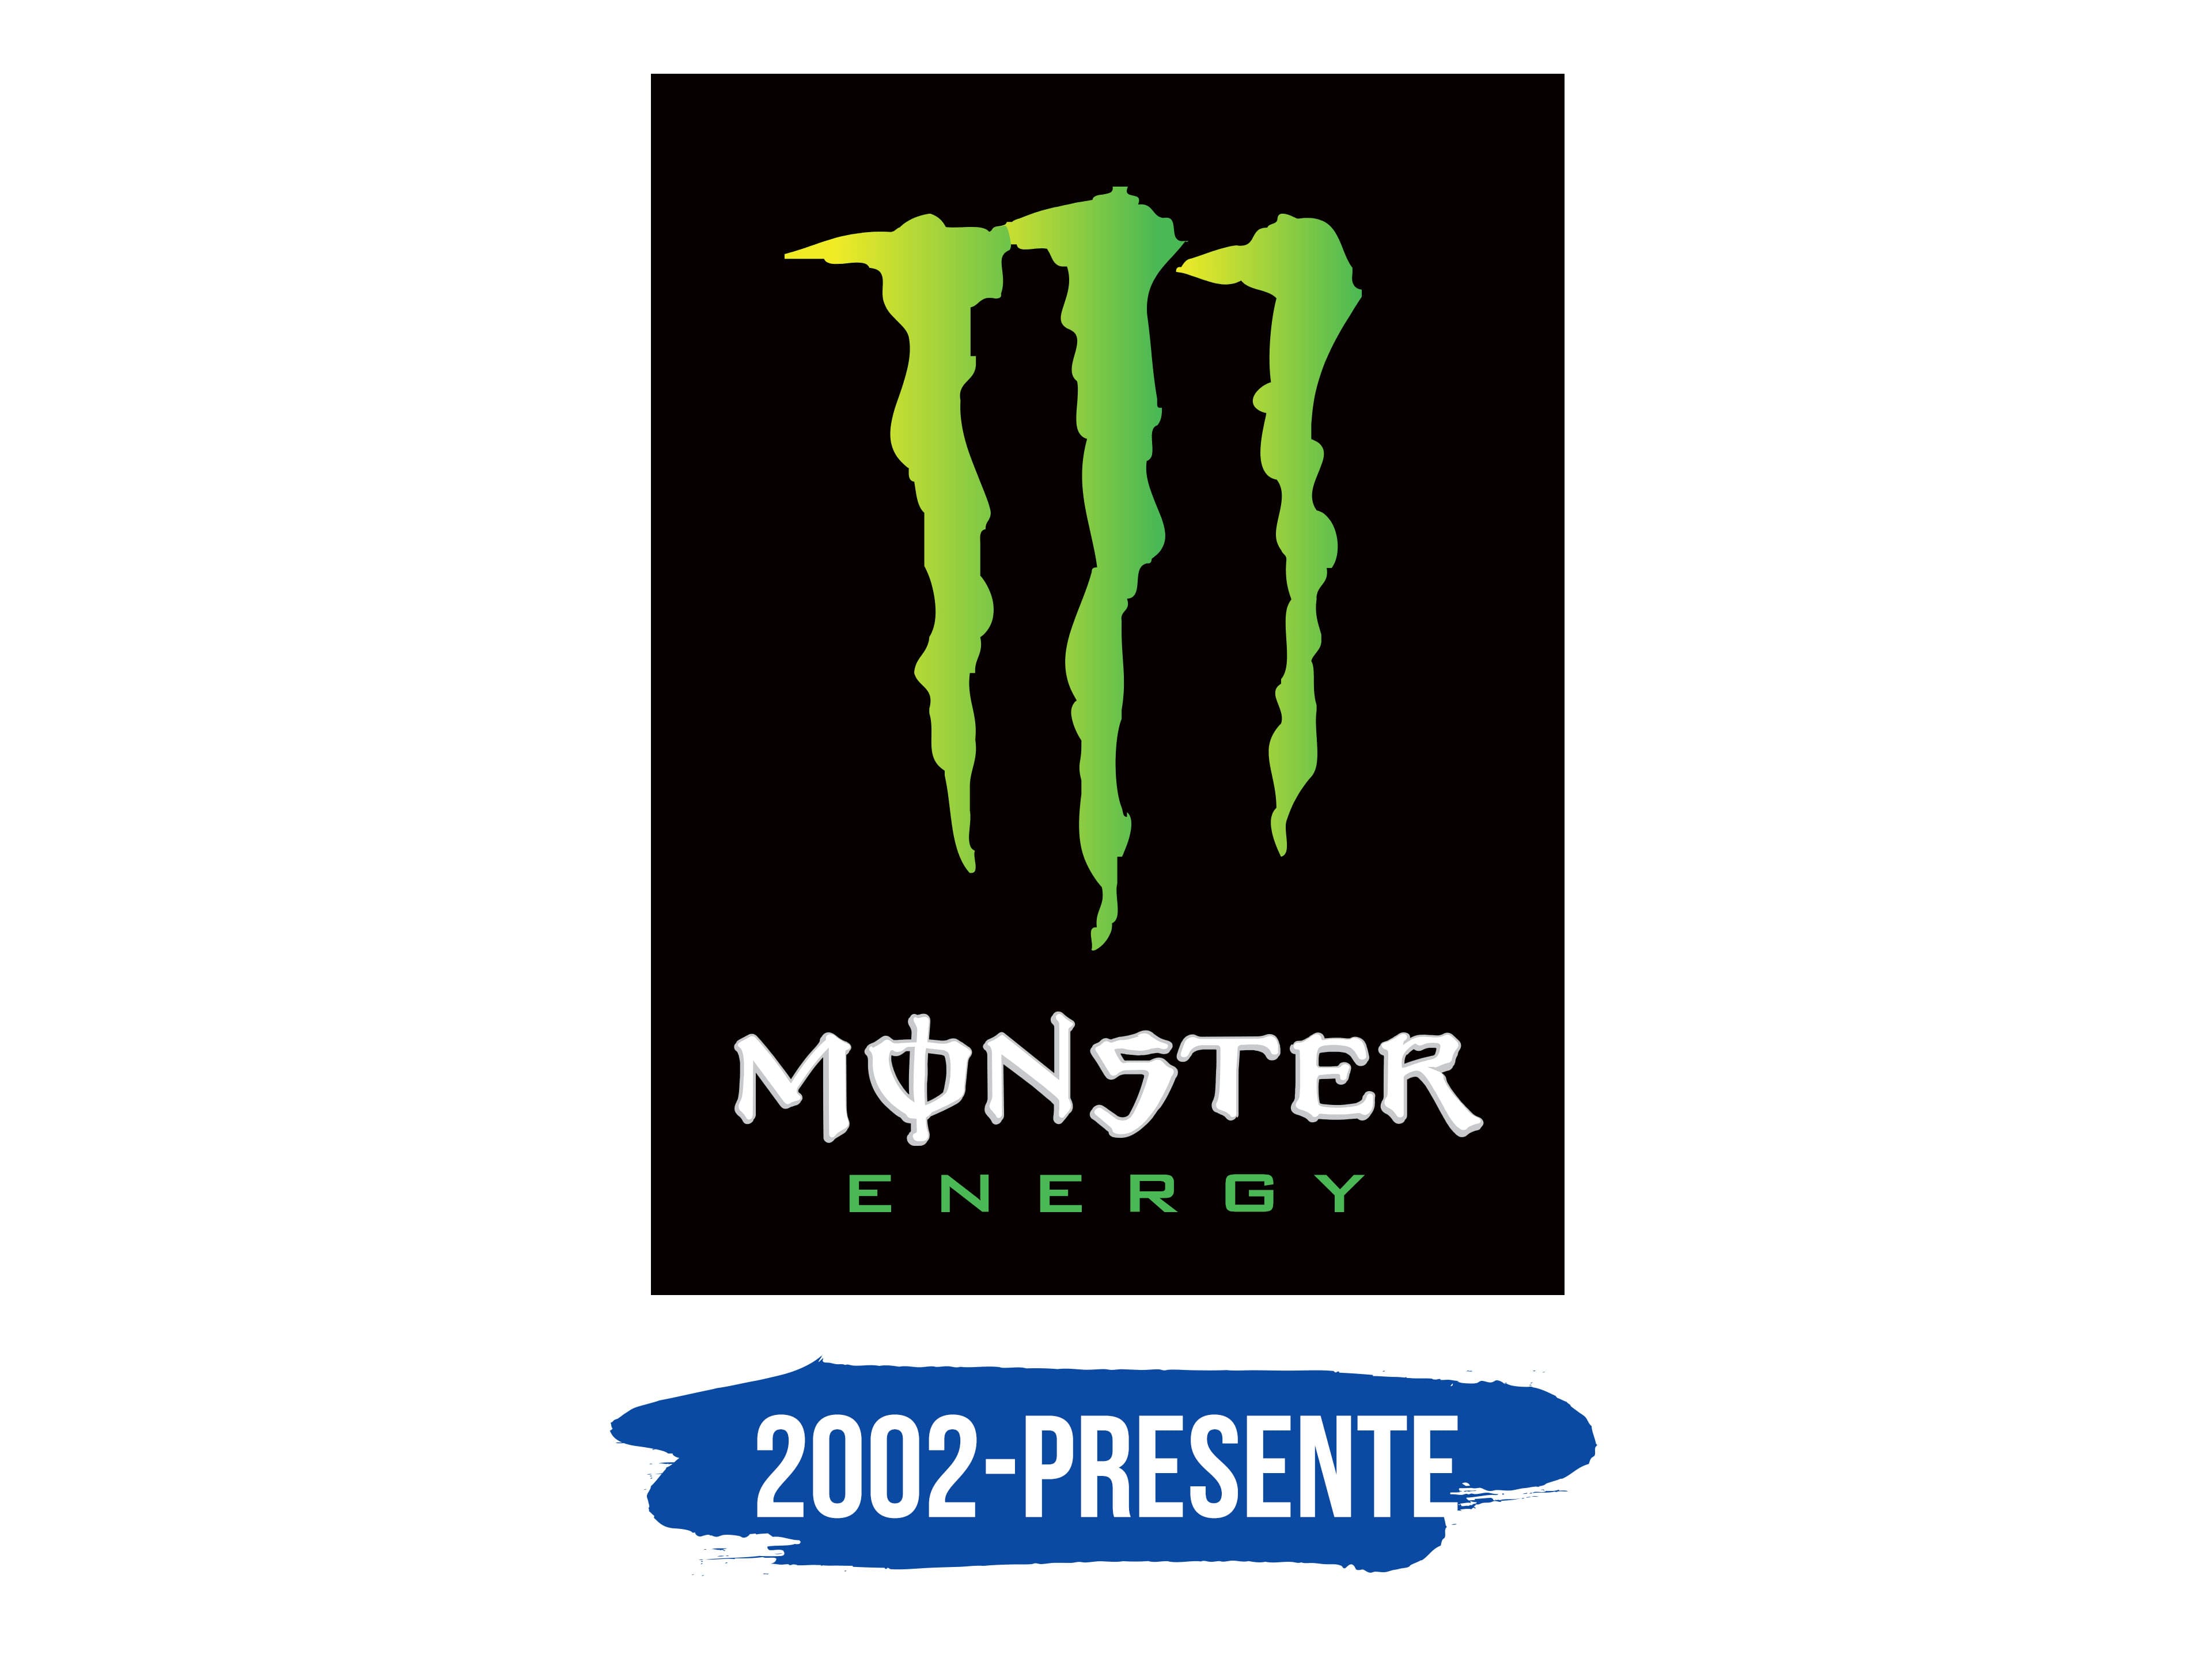 Monster Energy Logo S Mbolo Significado Logotipo Historia Png The